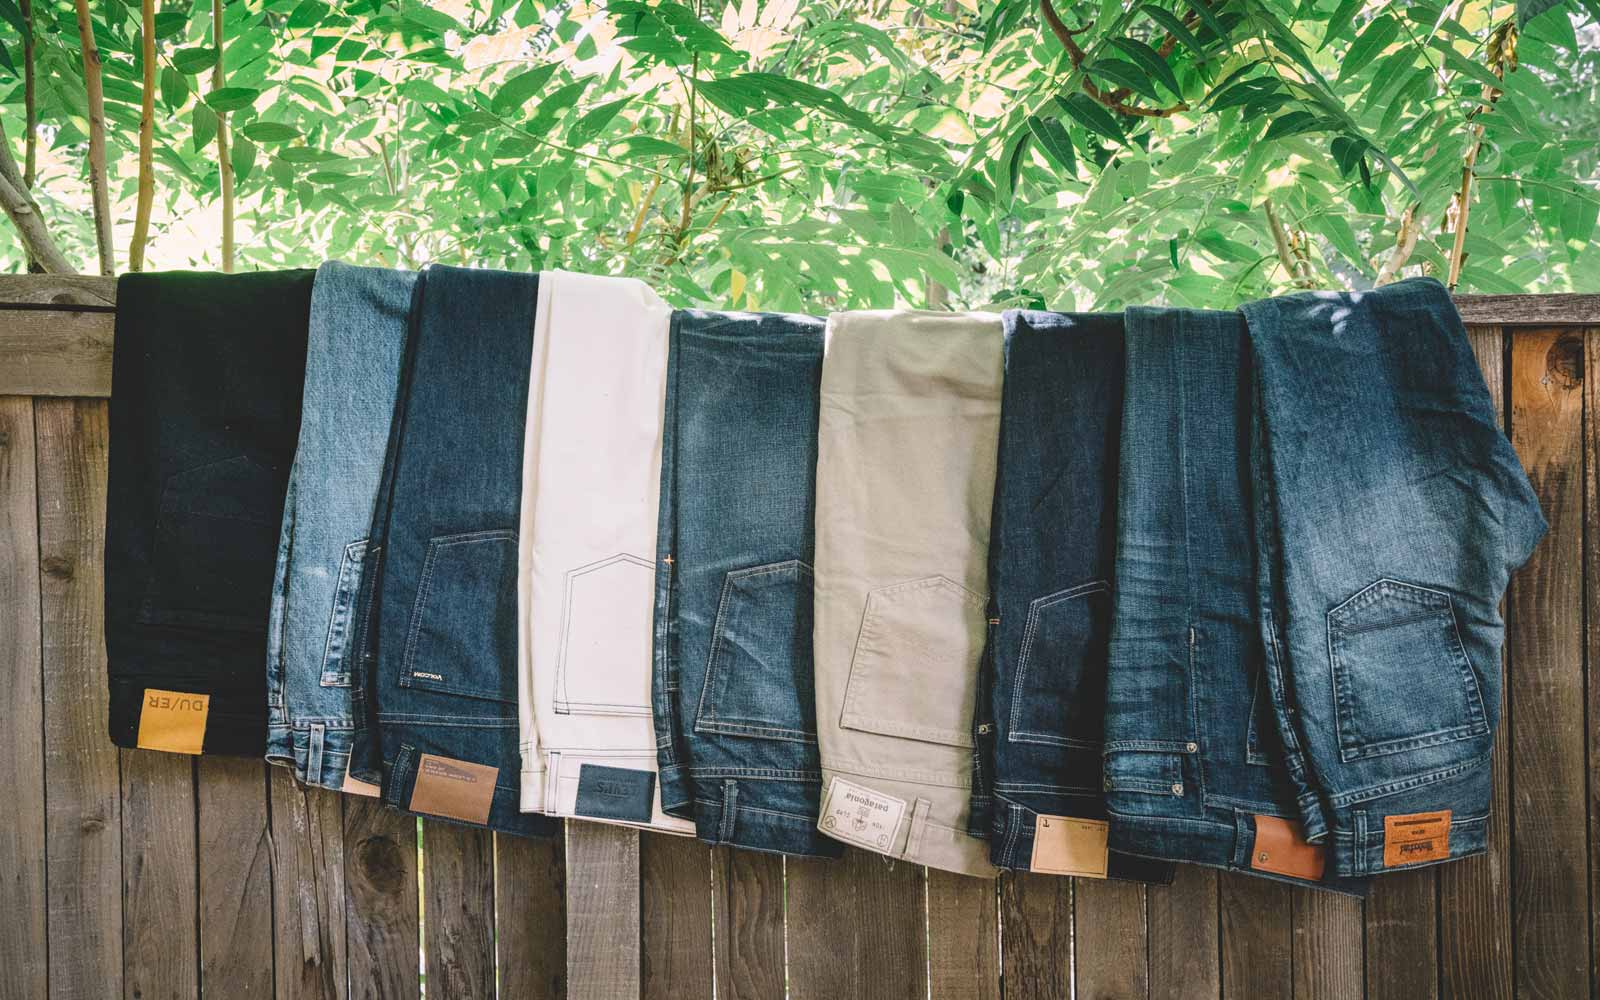 $75 vs. $295 Corduroy Pants (Trousers) - Key Differences - YouTube